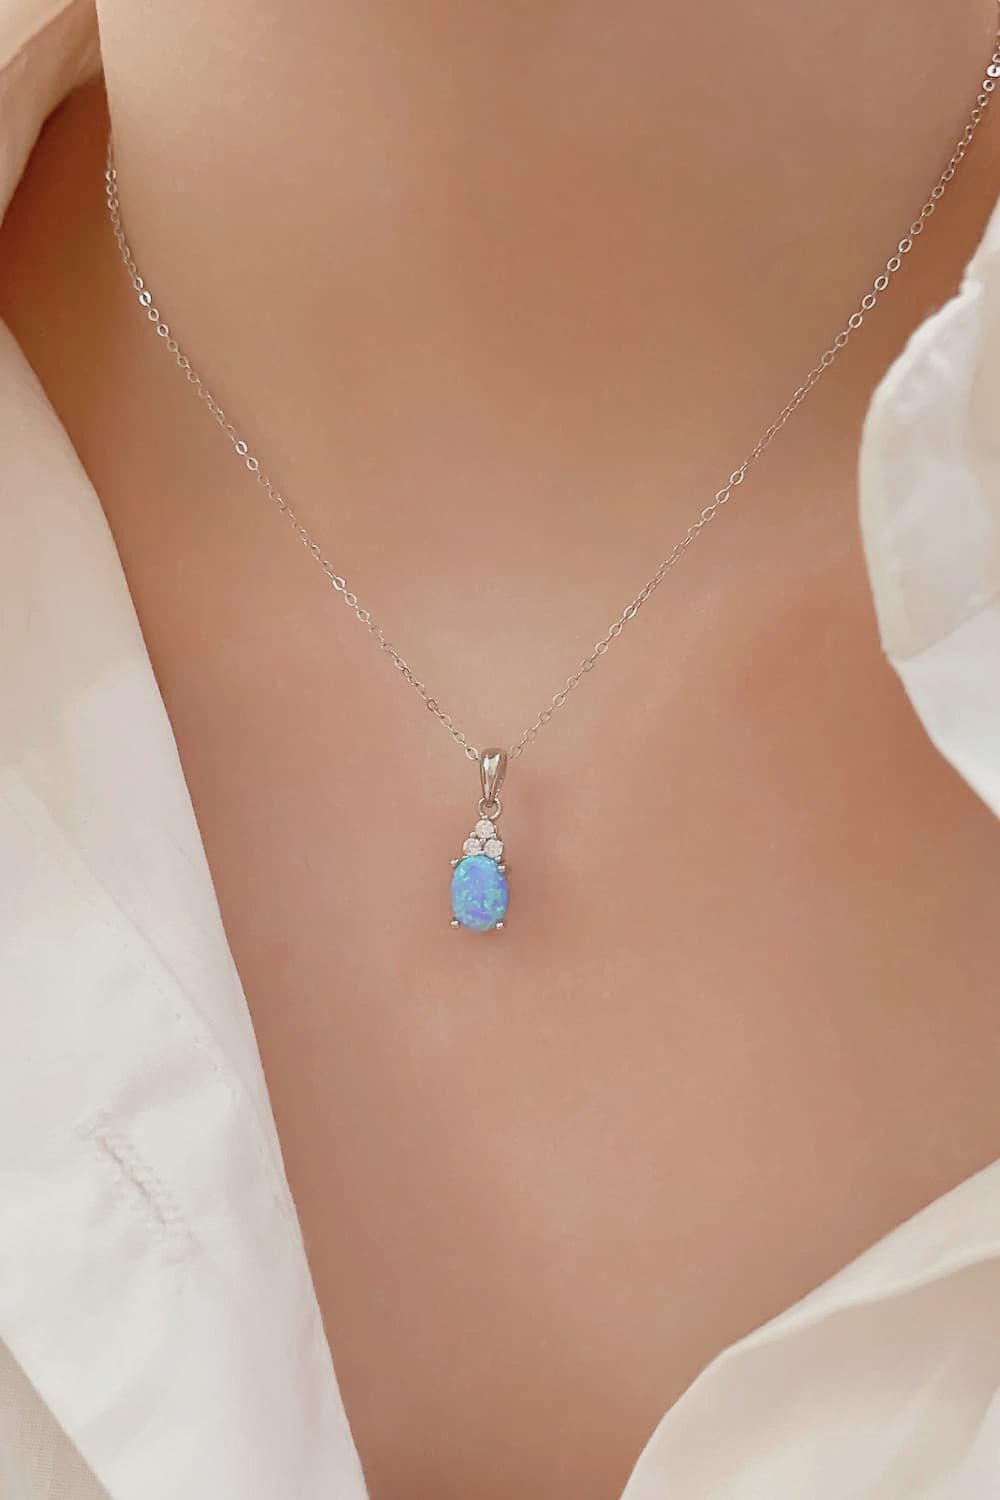 Find Your Center Opal Pendant Necklace - Tangerine Goddess